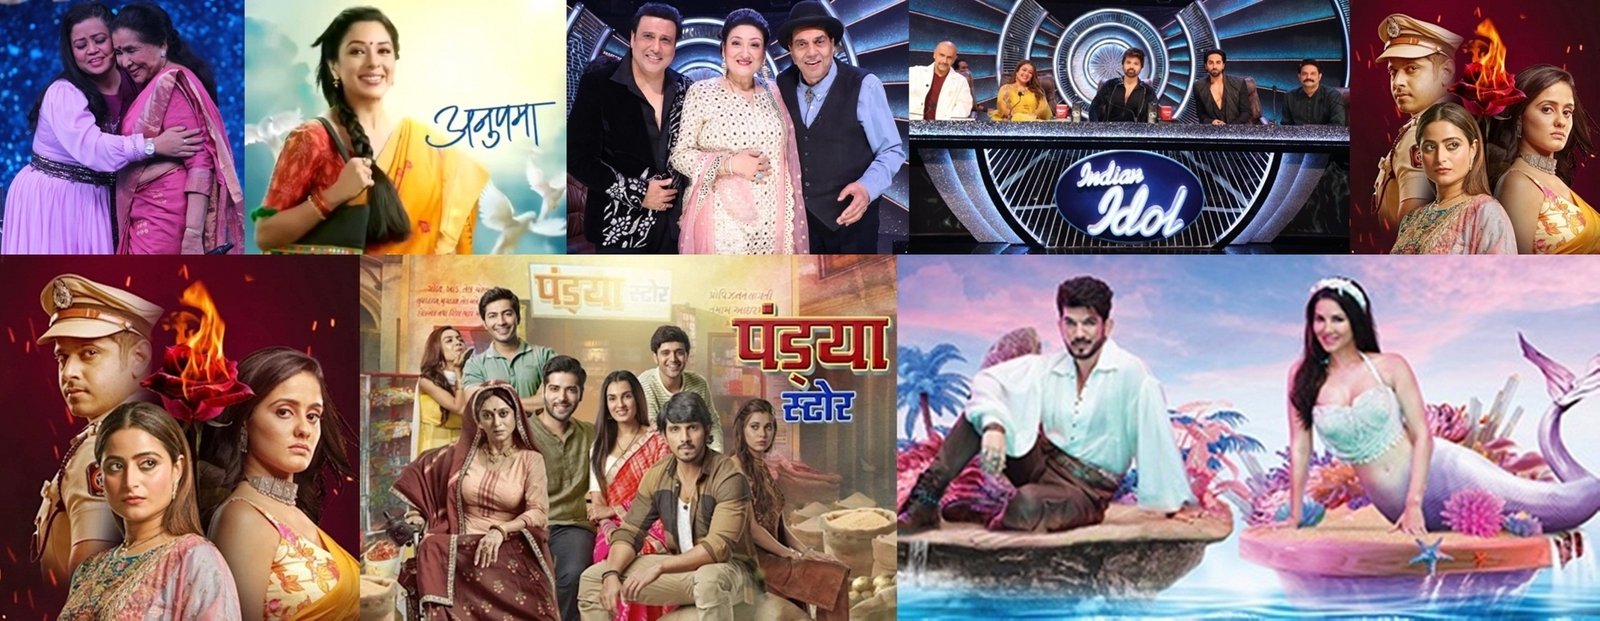 Asha Bhosle's surprise, new 'Anupamaa' twist top exciting week ahead on TV